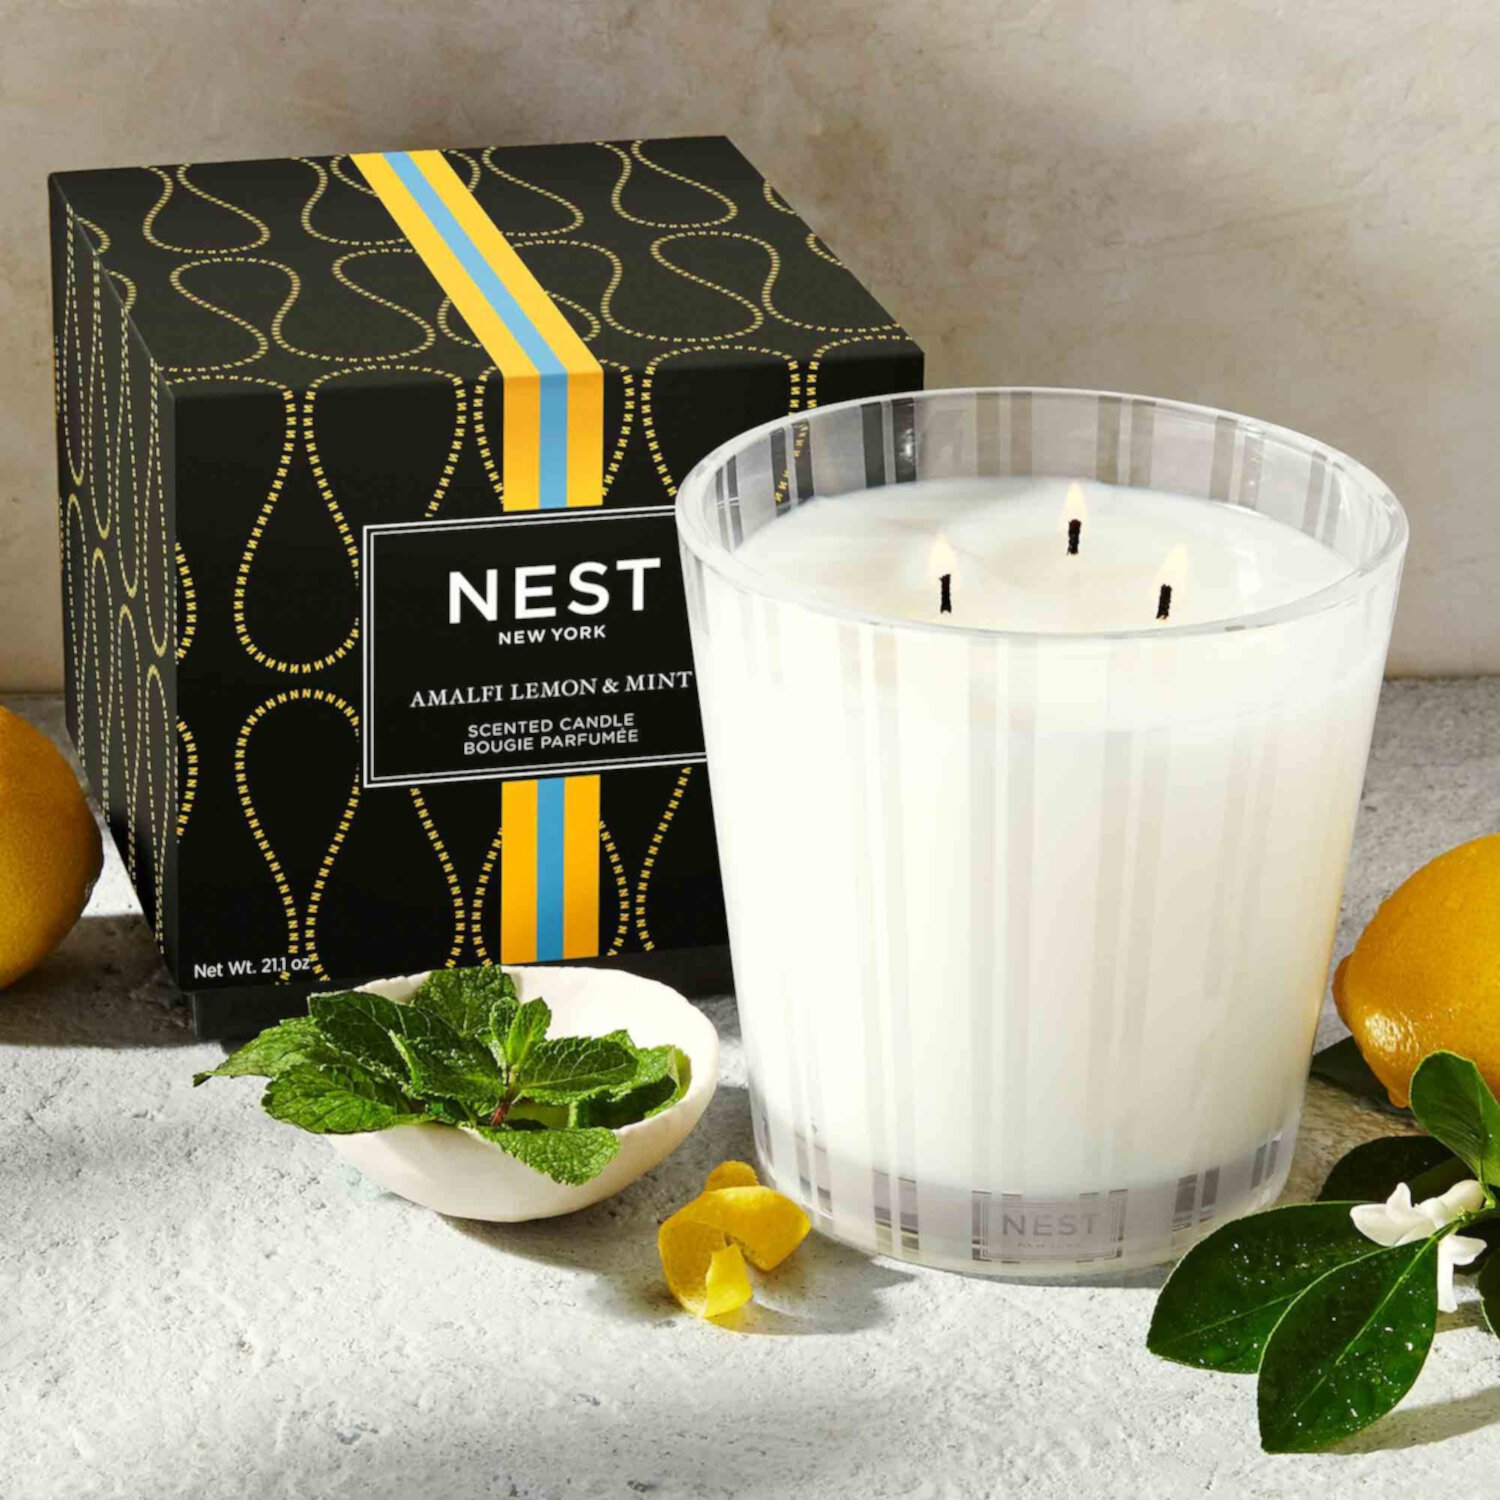 Amalfi Lemon & Mint Candle Nest New York